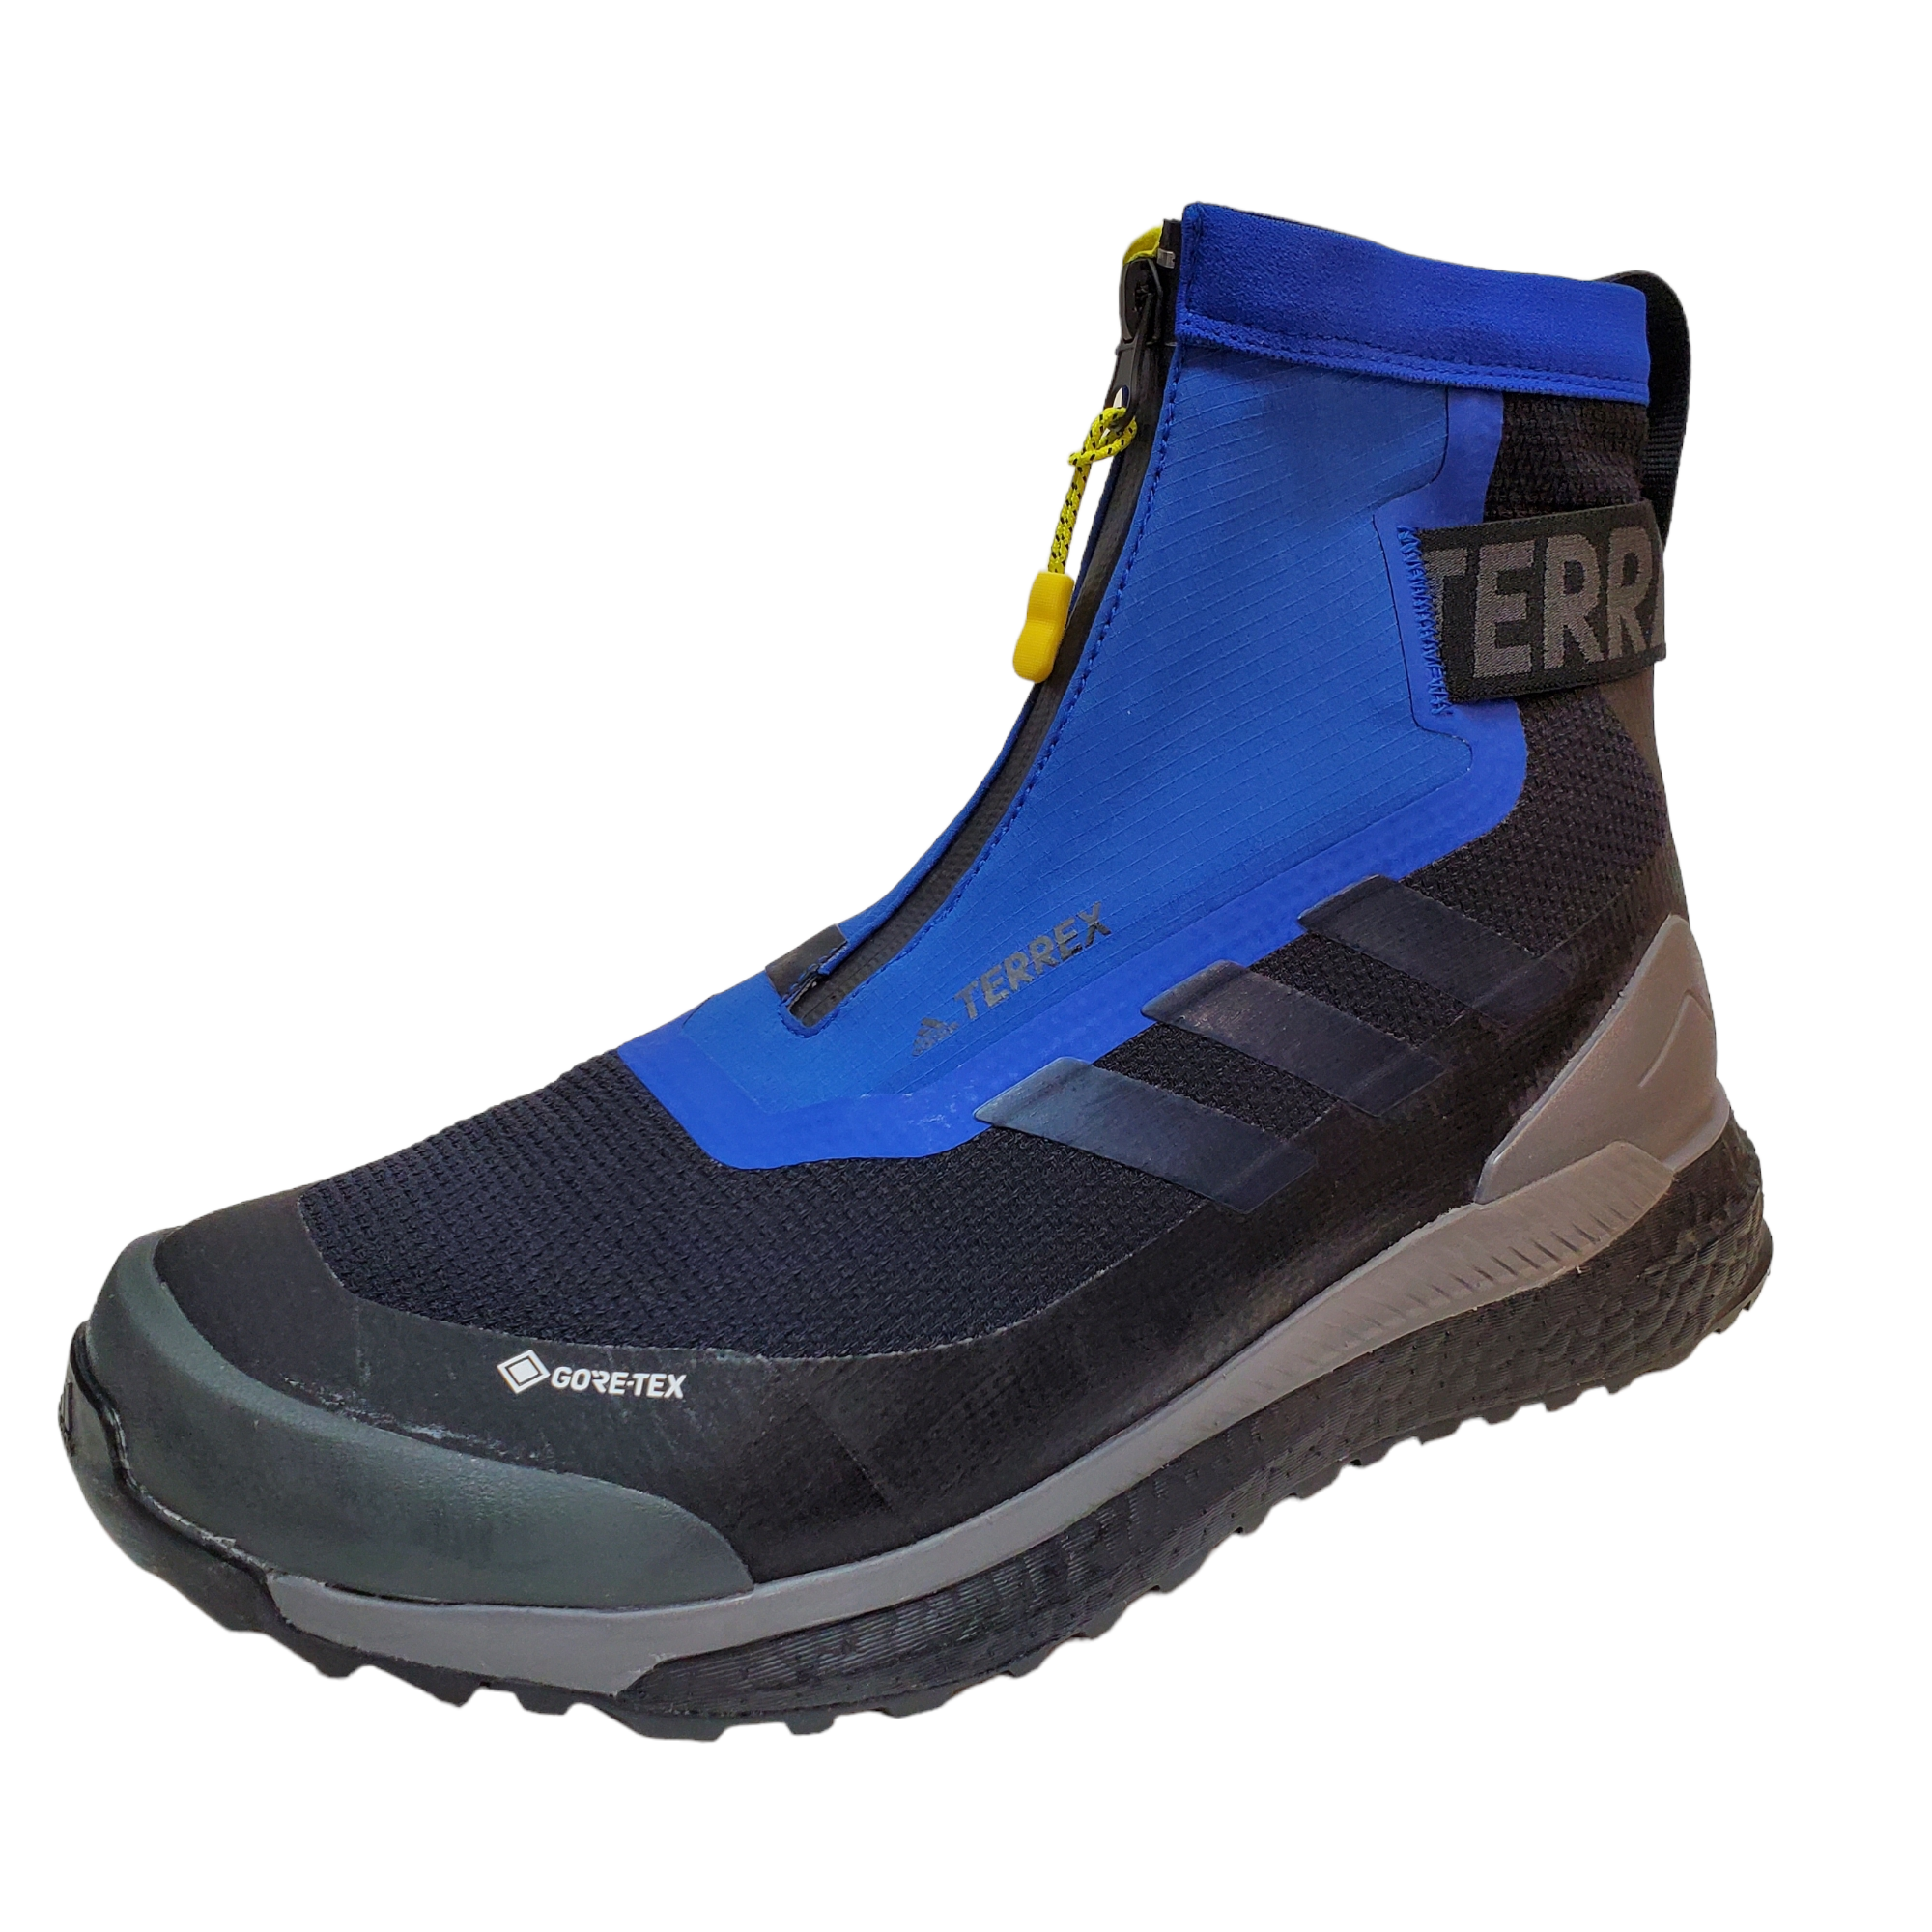 adidas men's tivid r rdy hiking shoes waterproof